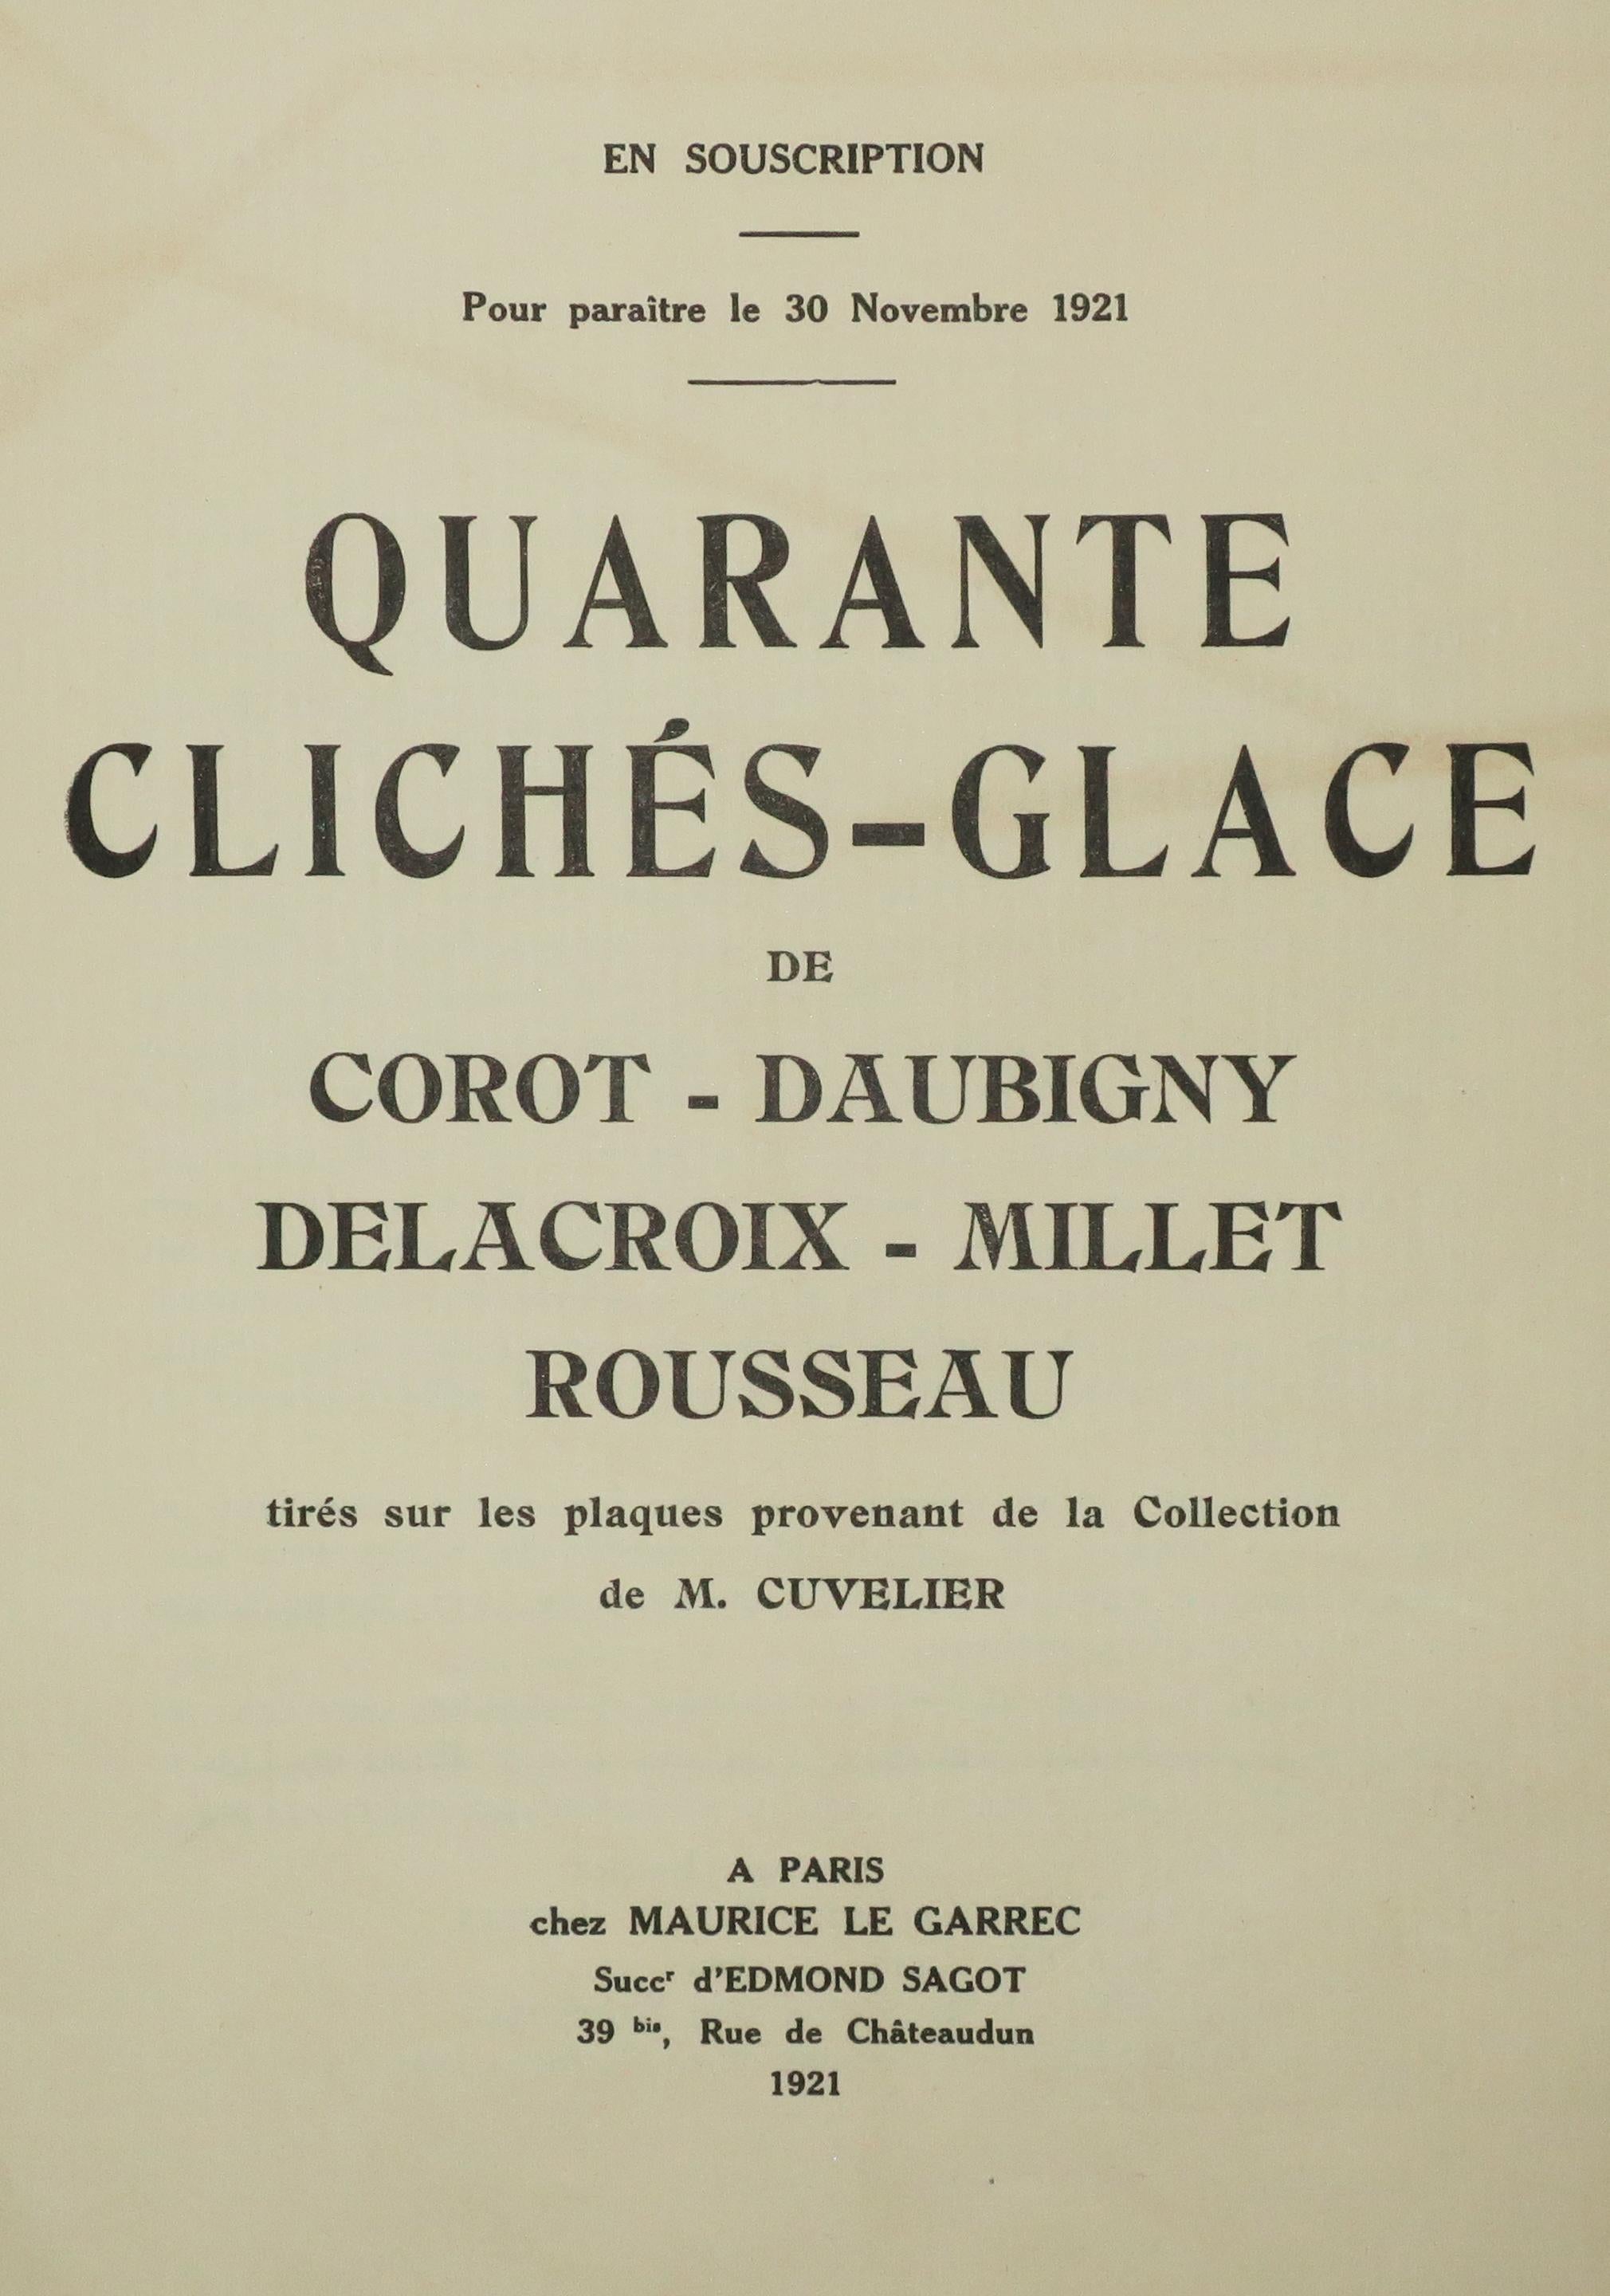 Quarante clichés-glace - Print by Jean-Baptiste-Camille Corot